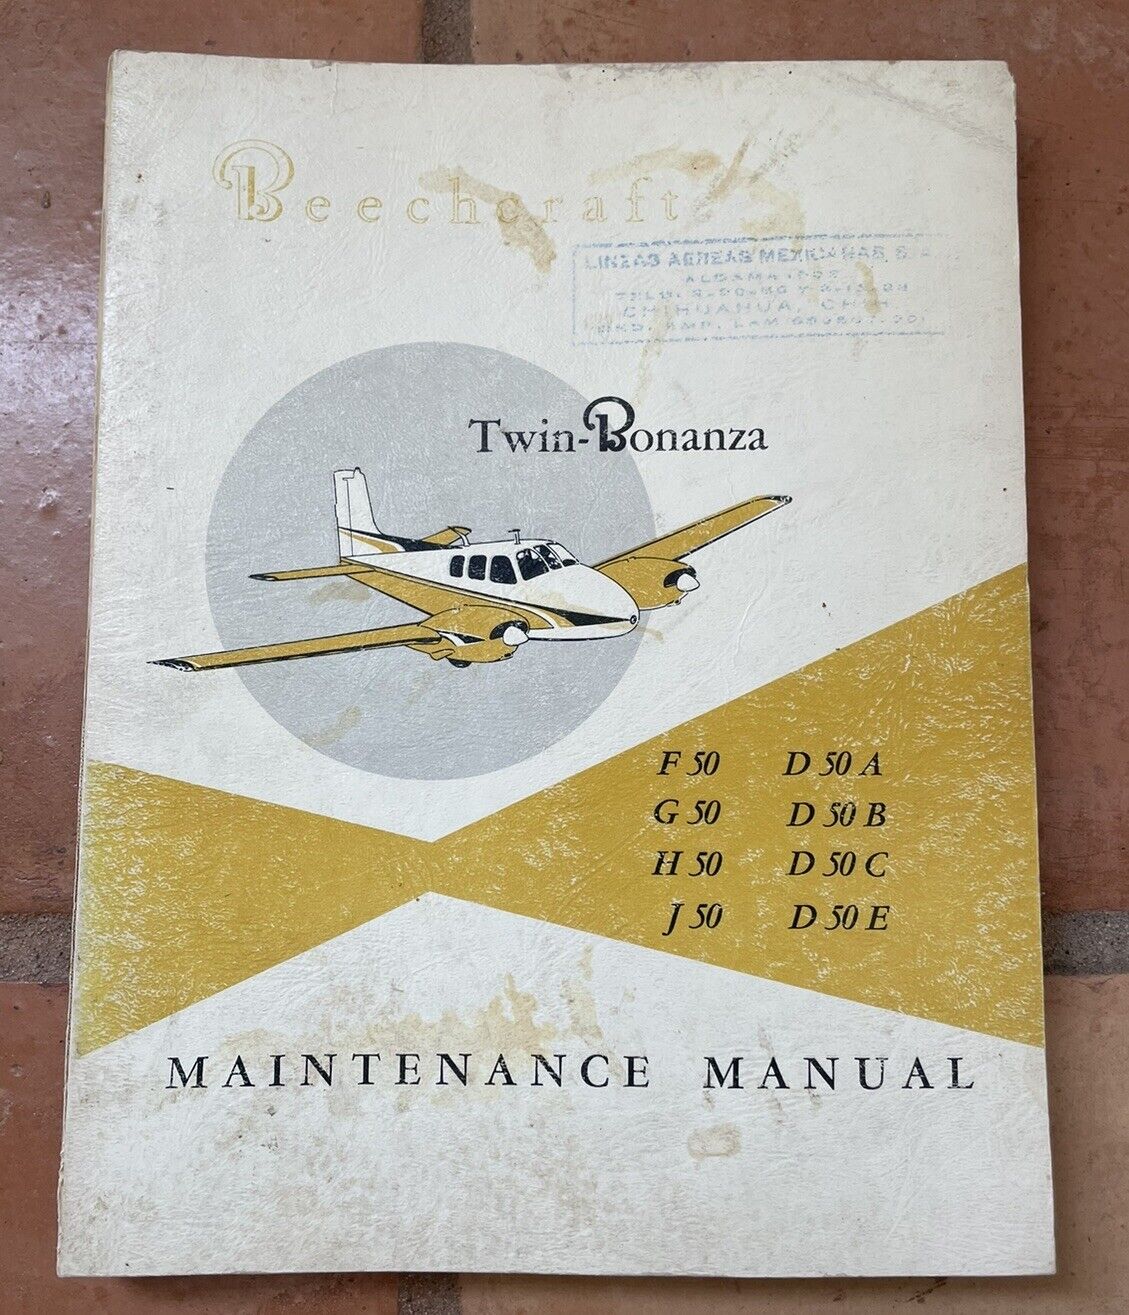 Beechcraft Twin-Bonanza F G H J-50 D-50 A B C &E Maintenance Manual Nov. 1957